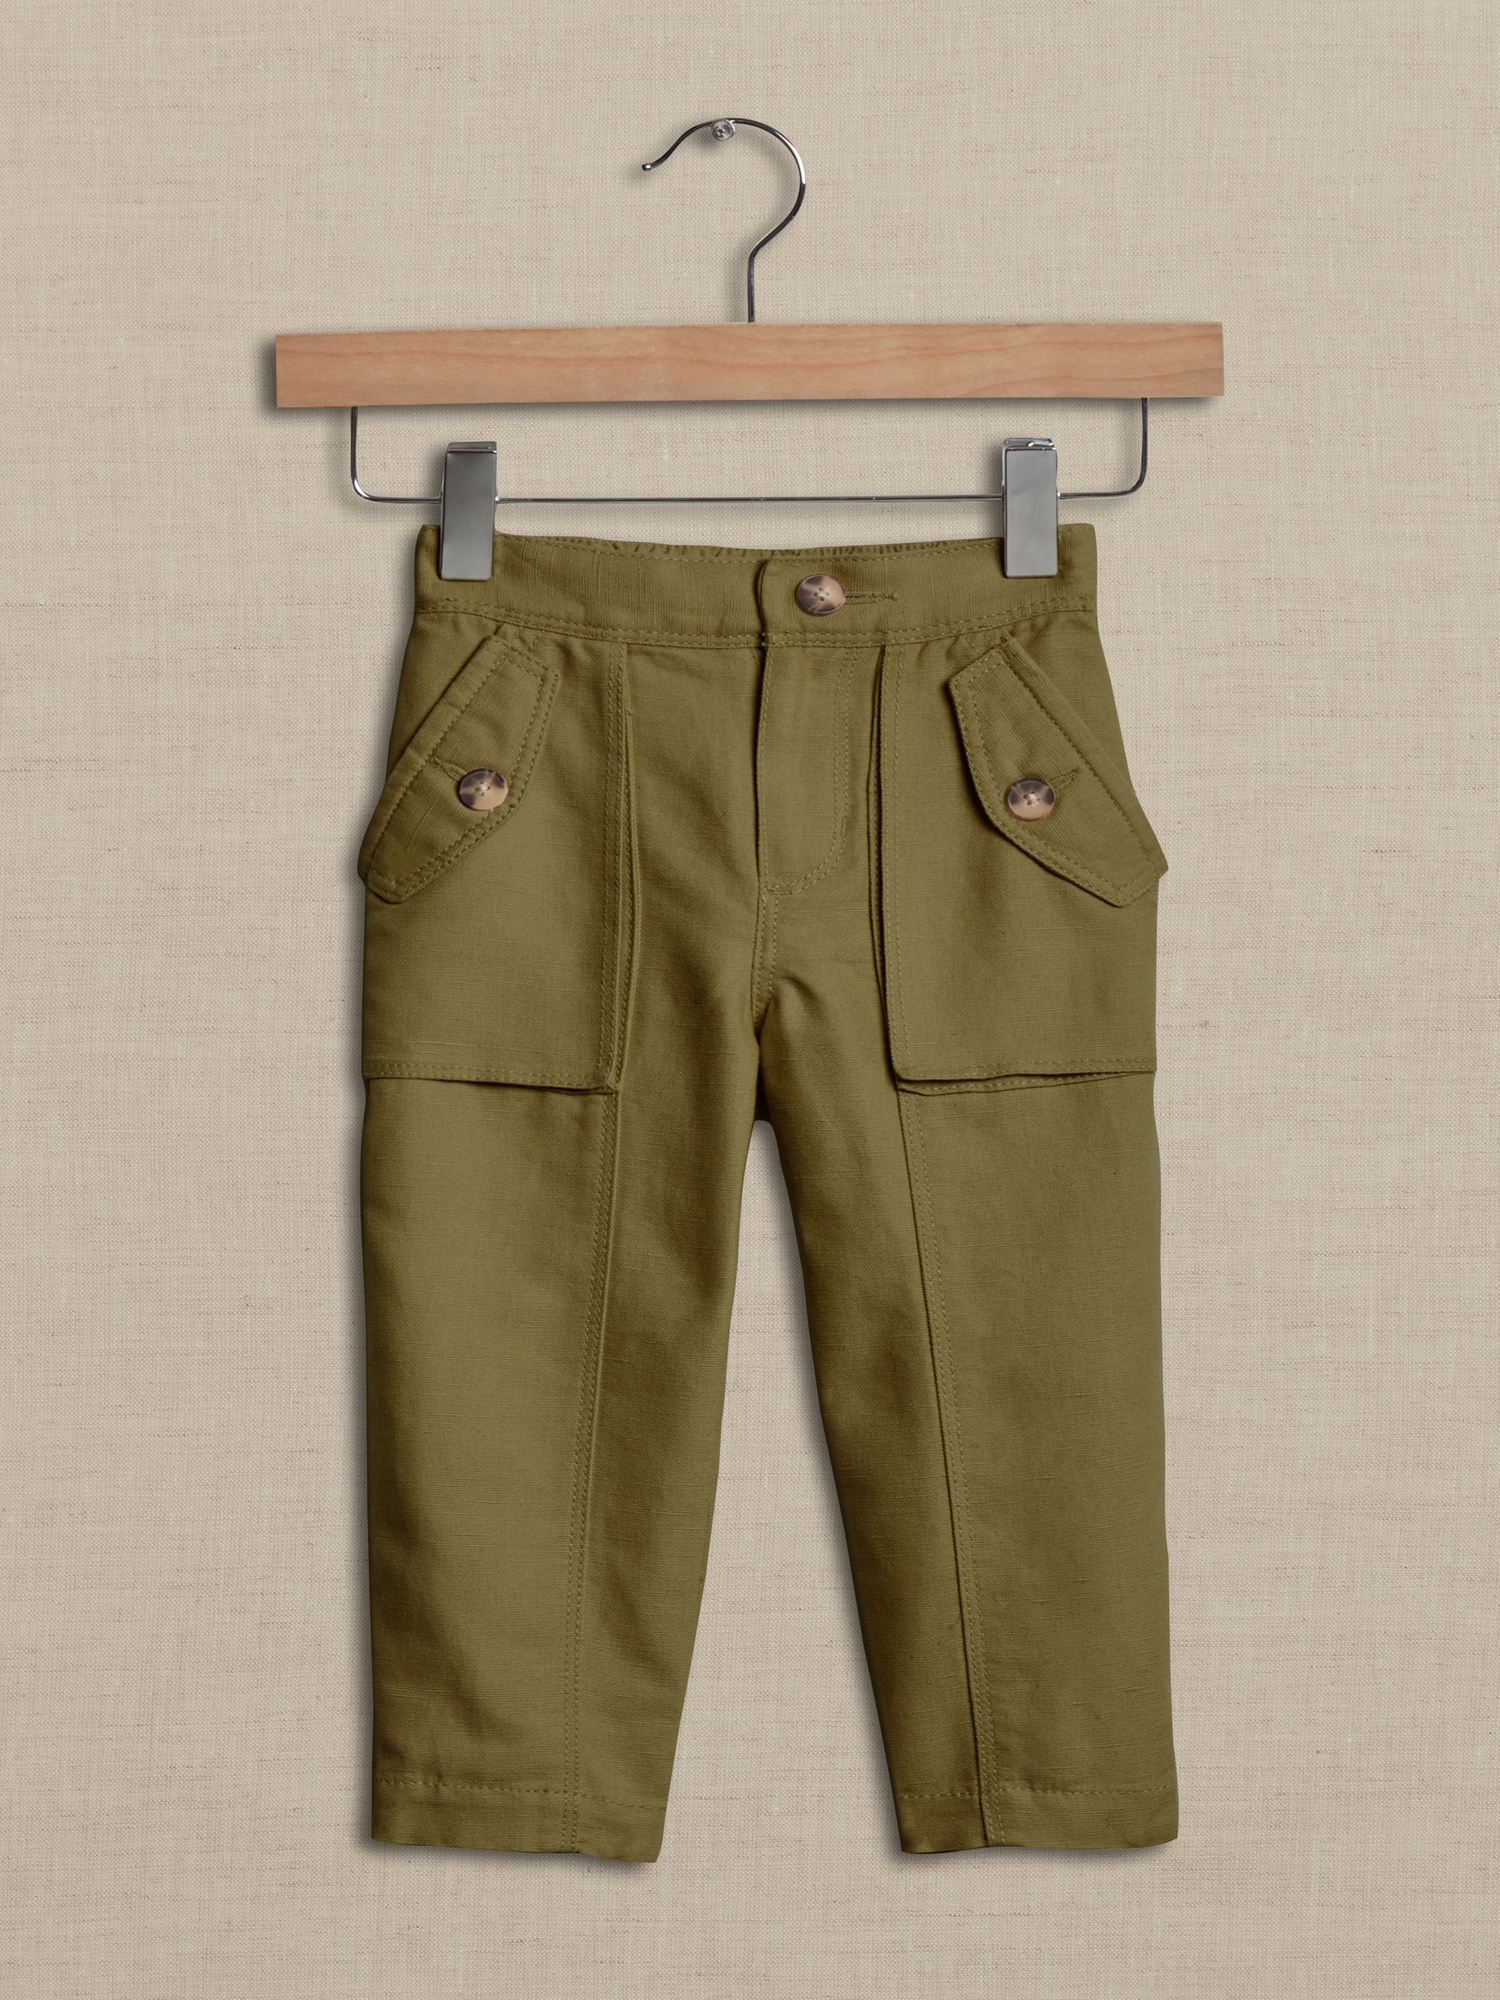 Buy Pants Banana Republic, Modern kids clothing from KidsMall - 105915